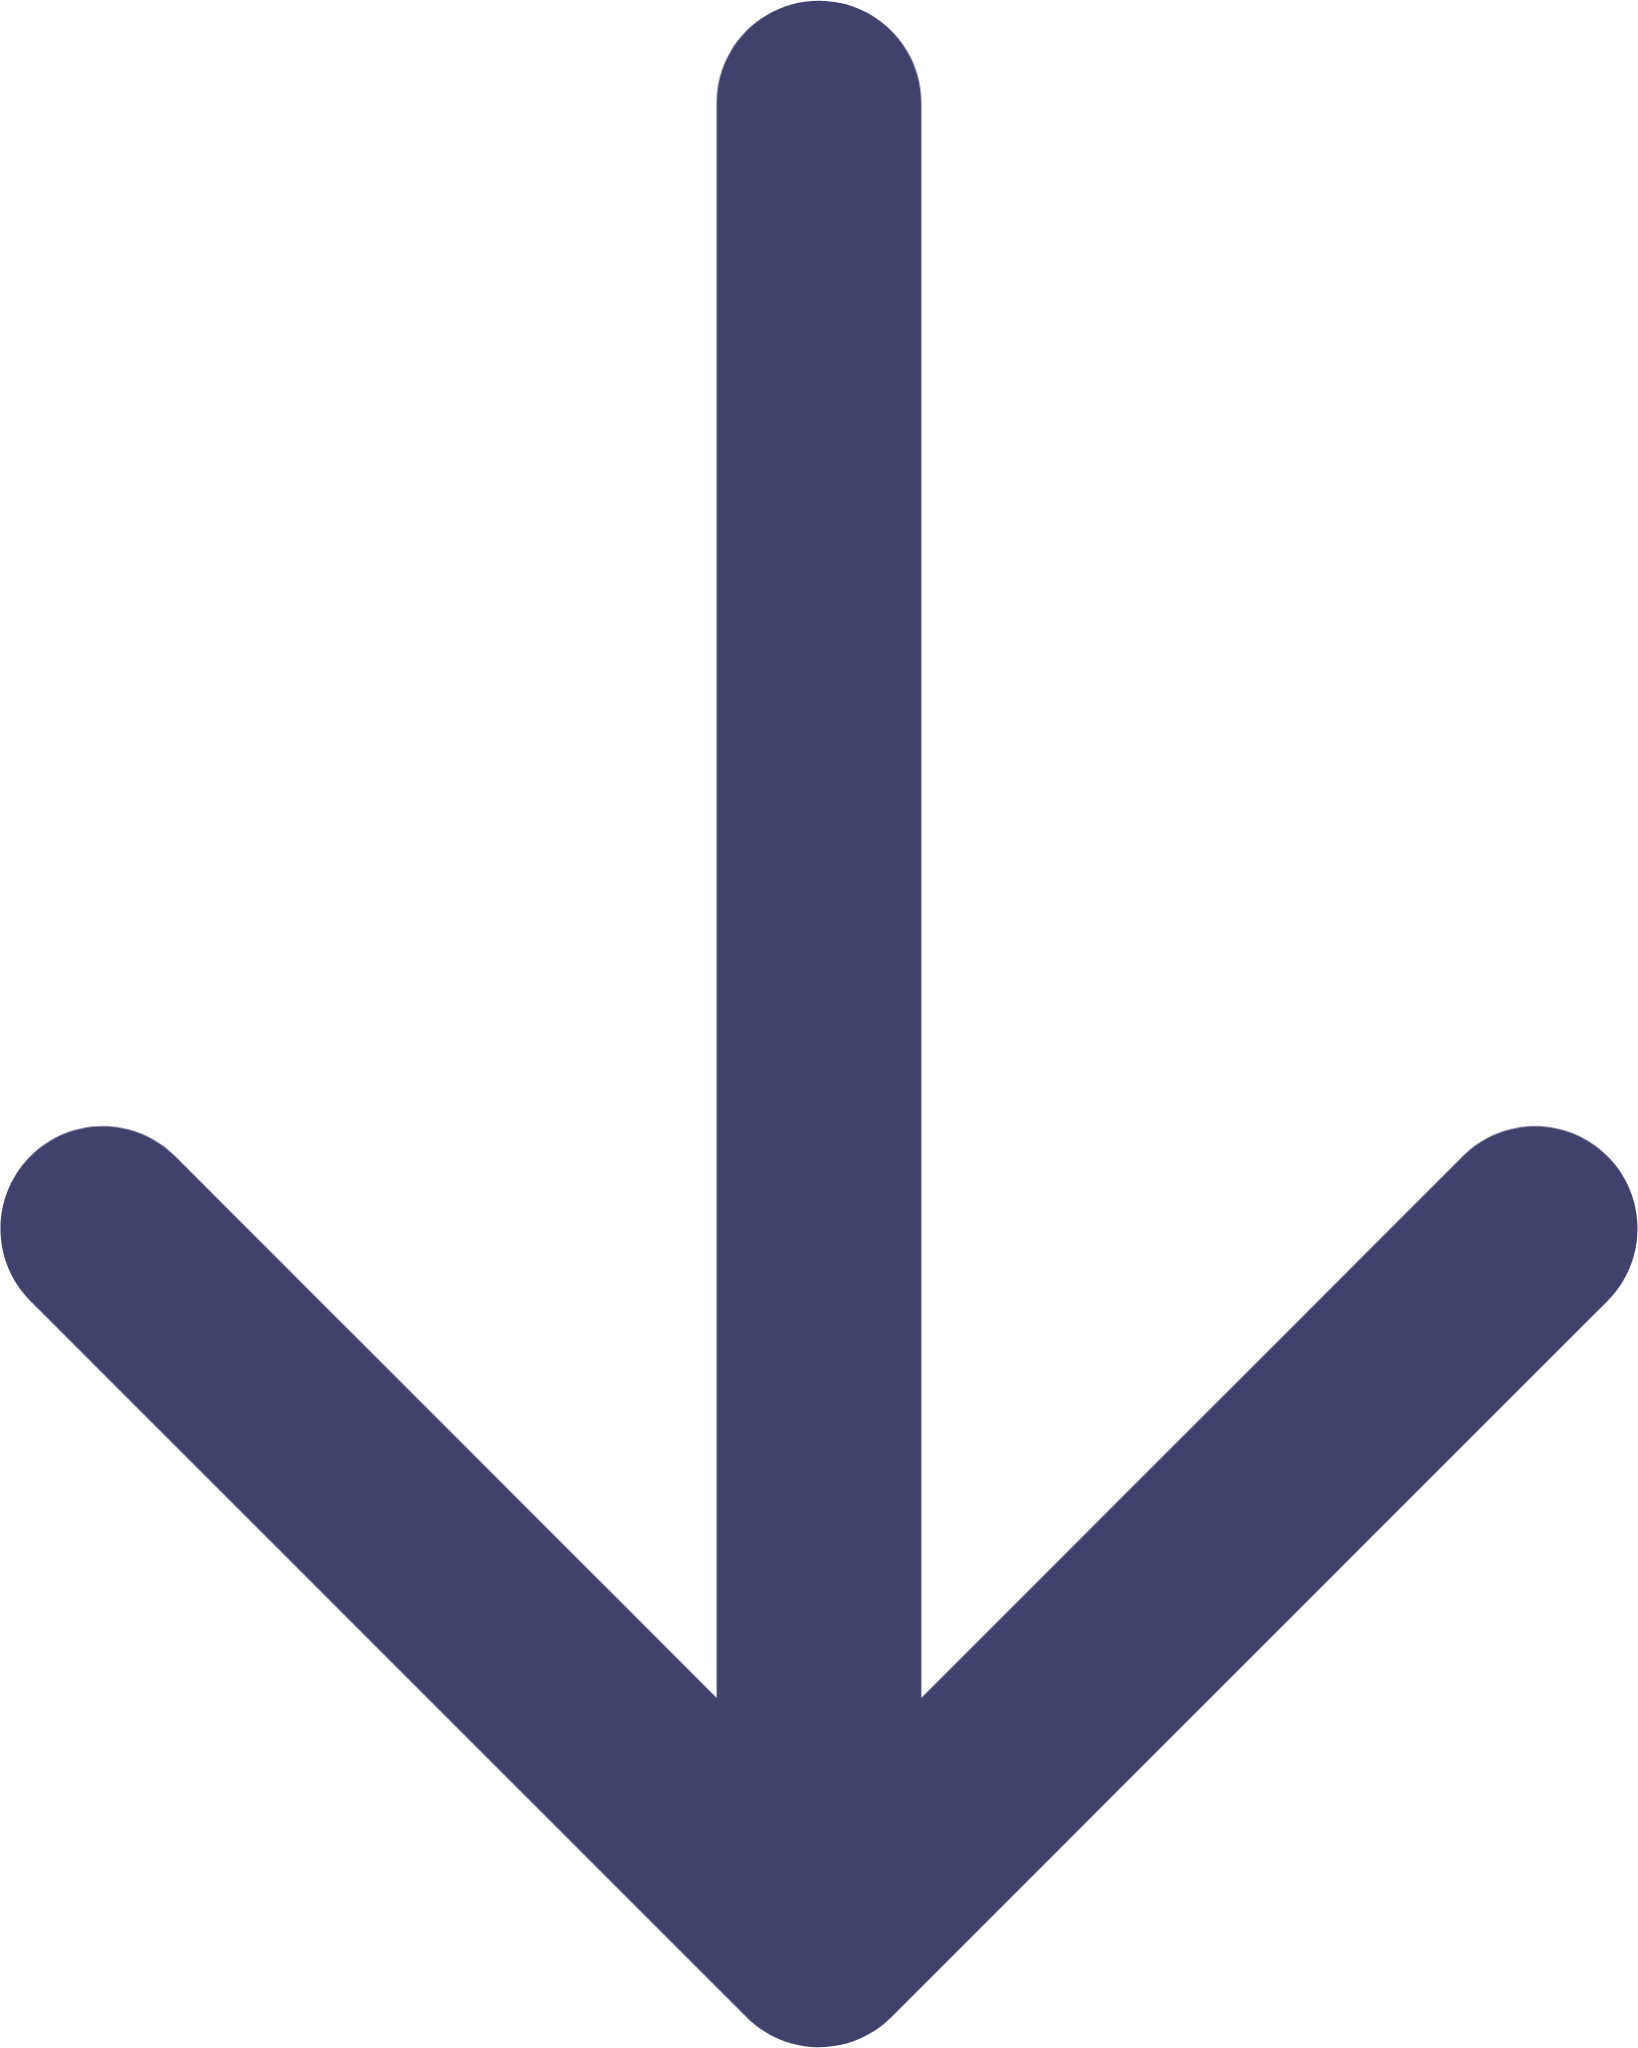 blue arrow icon down